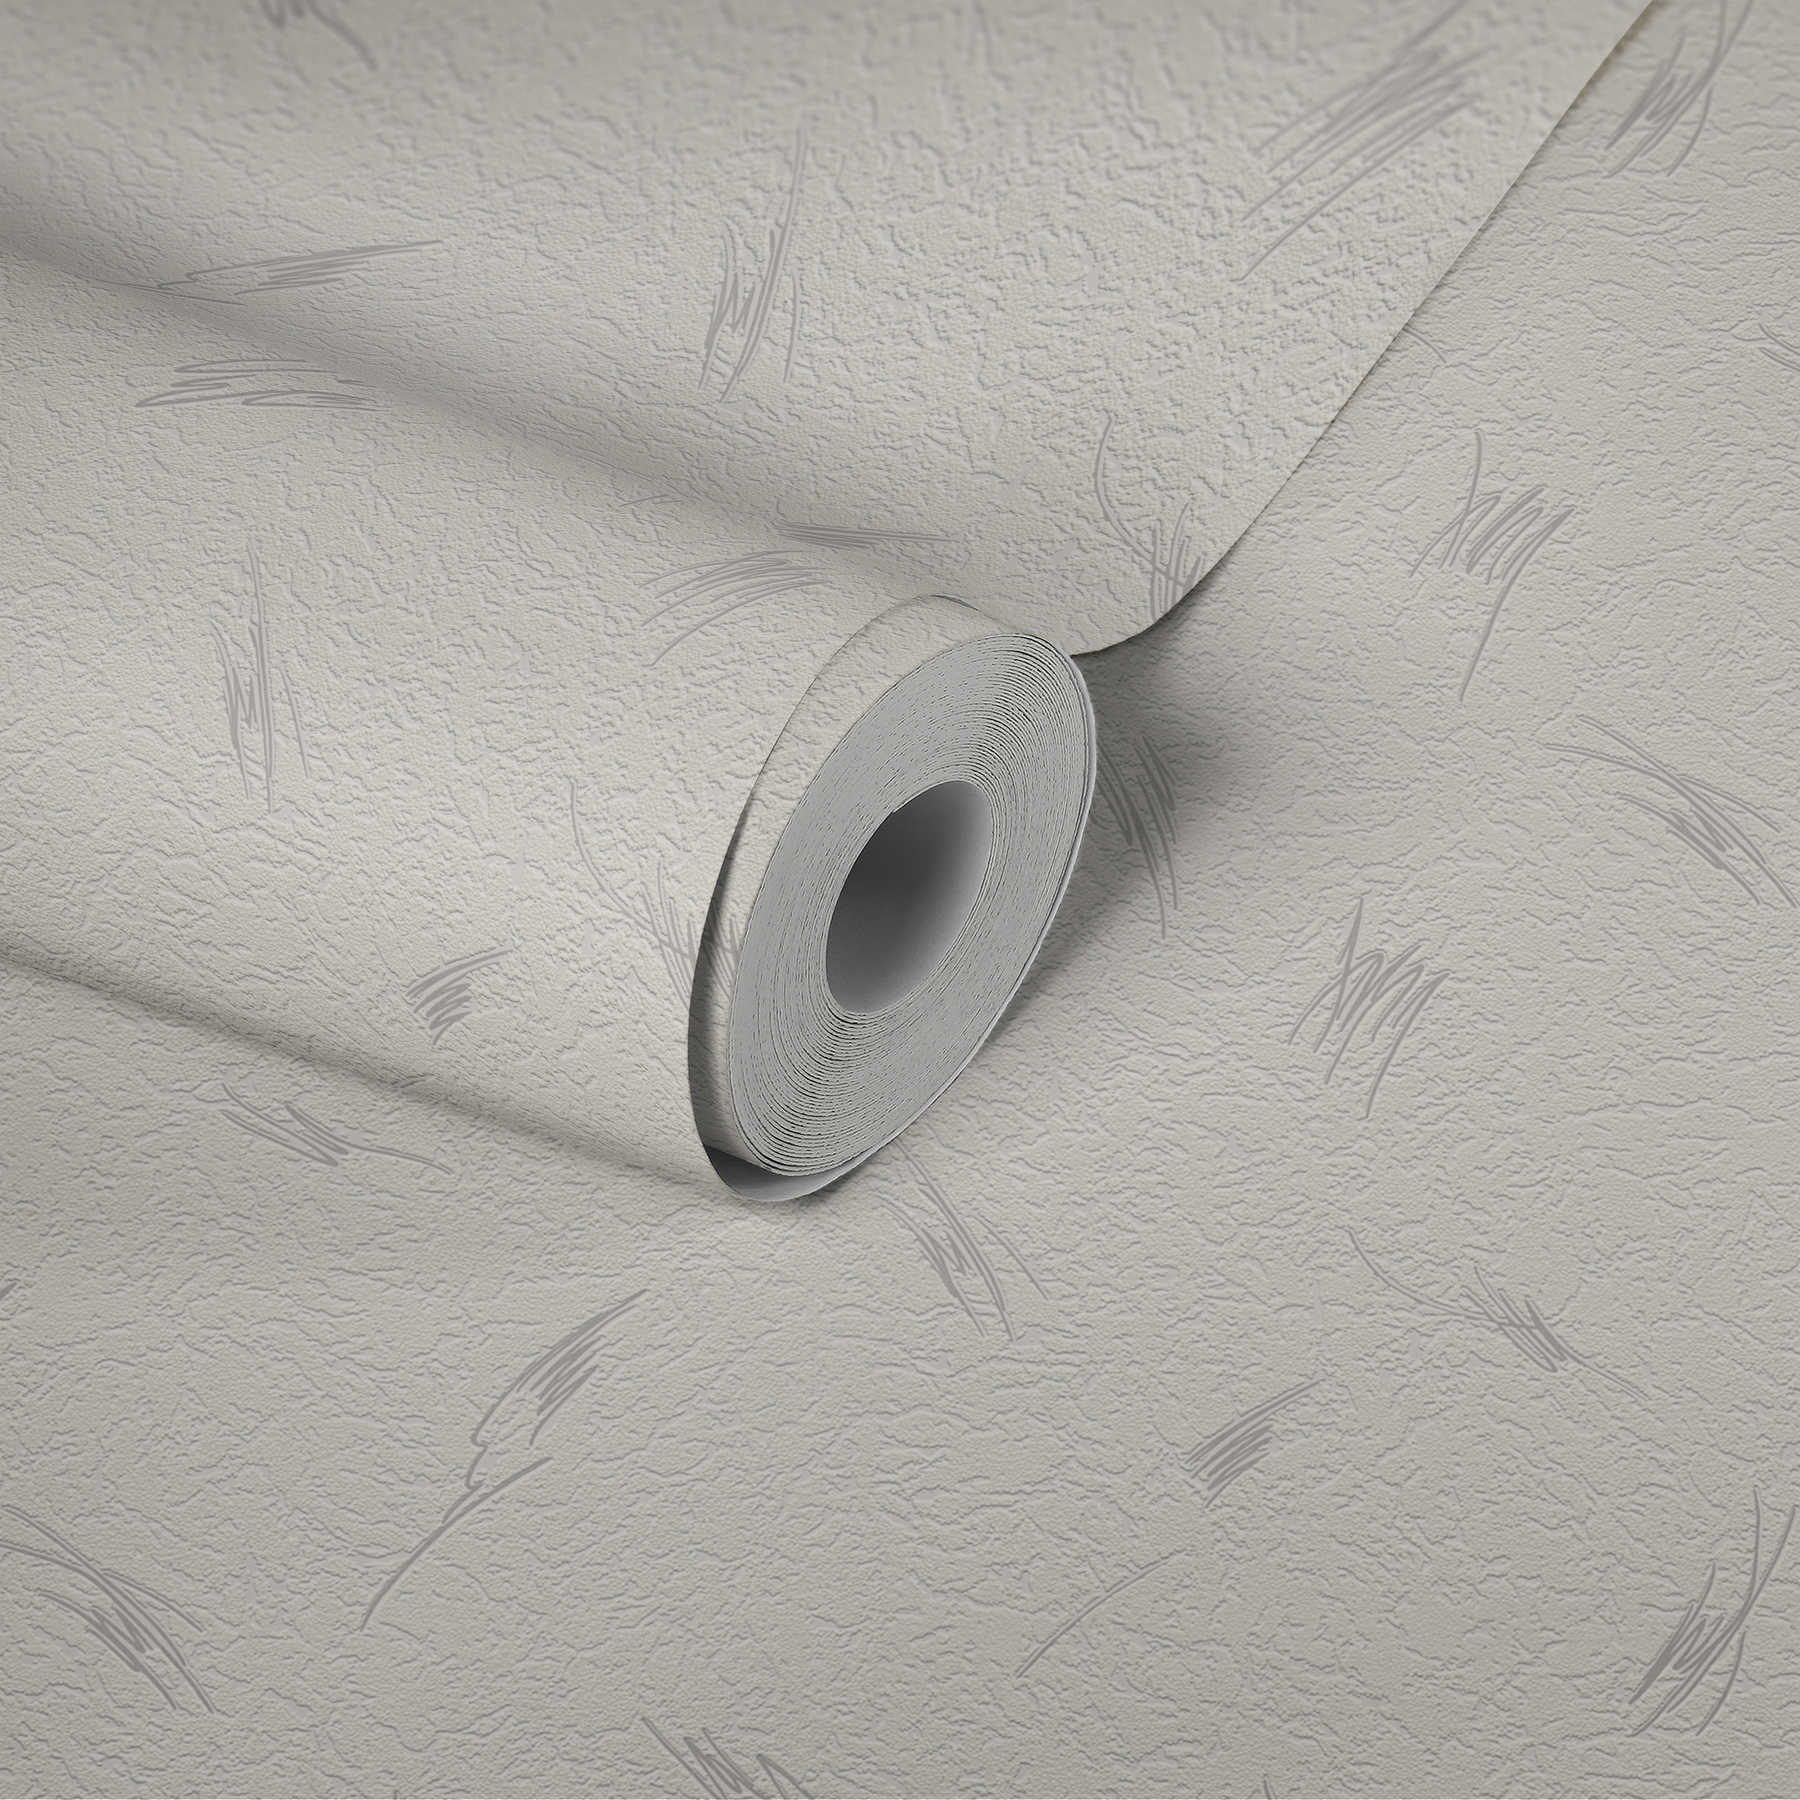             Plaster optics wallpaper with abstract pattern - metallic, white
        